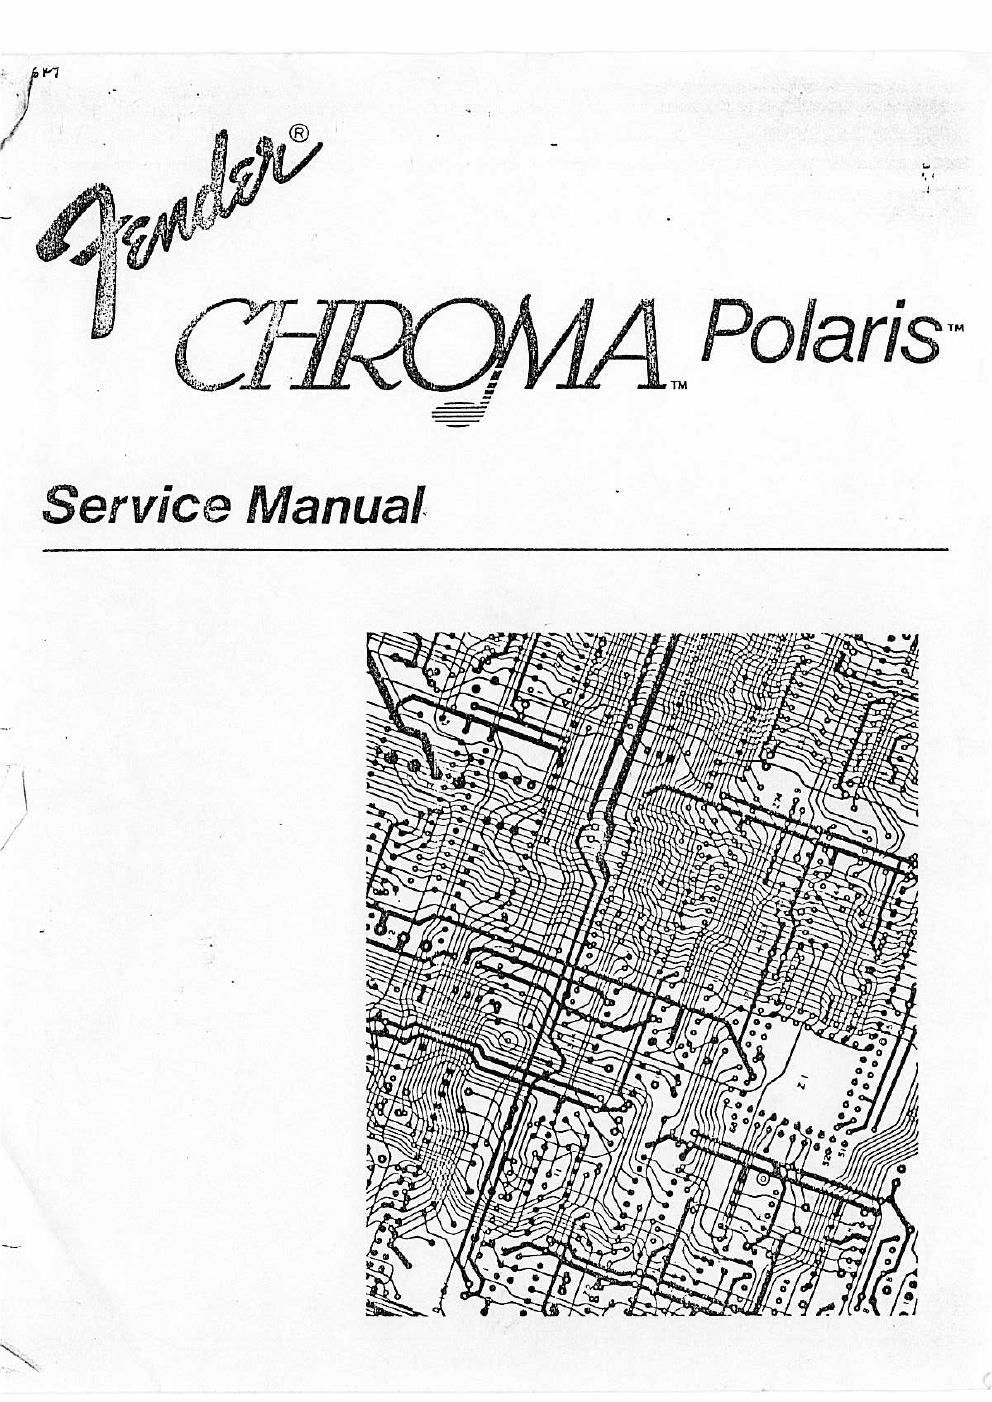 fender chroma polaris service manual